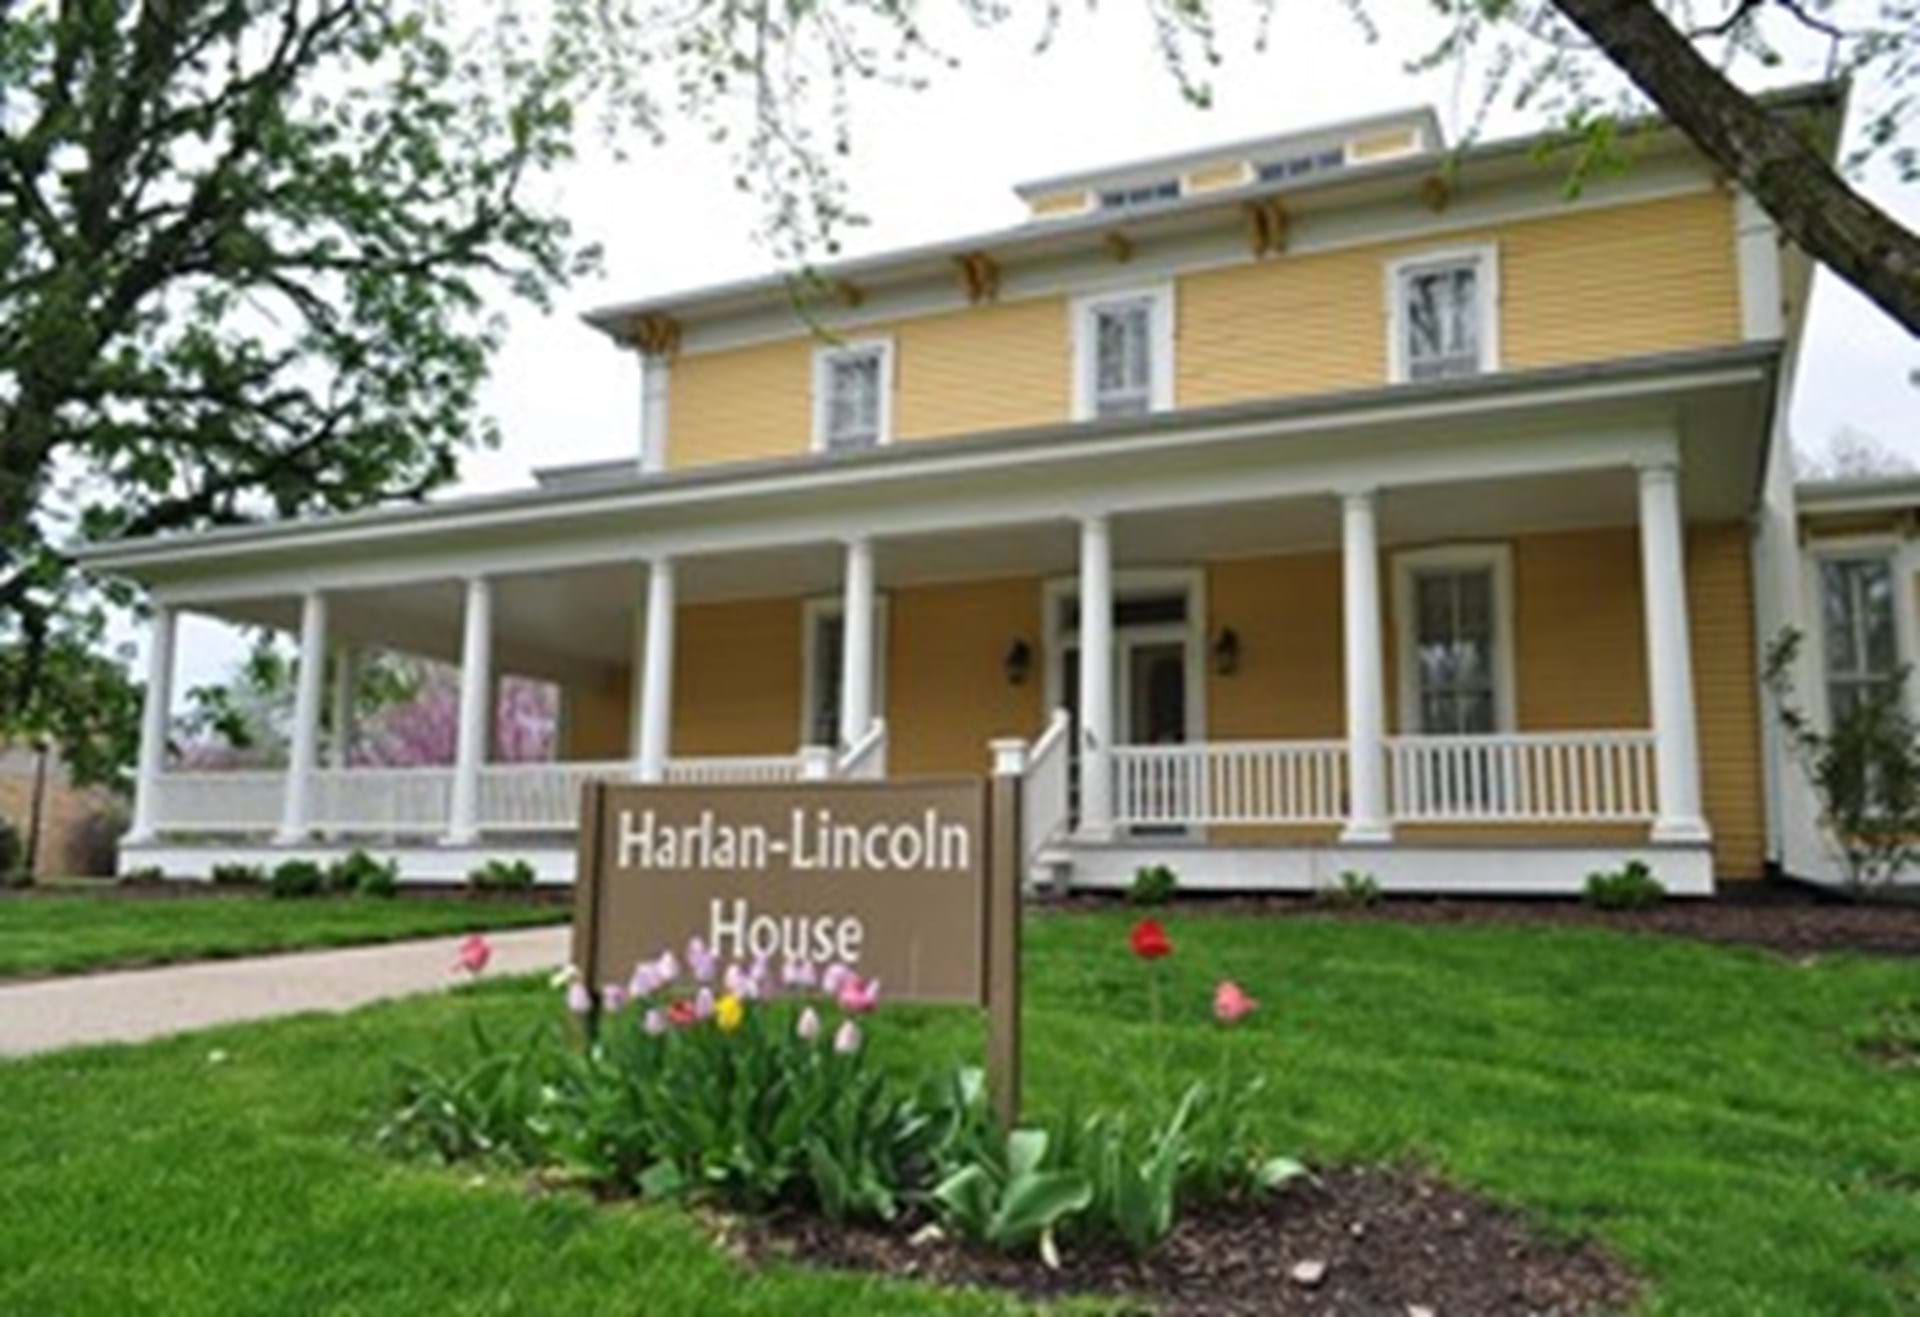 Harlan-Lincoln House